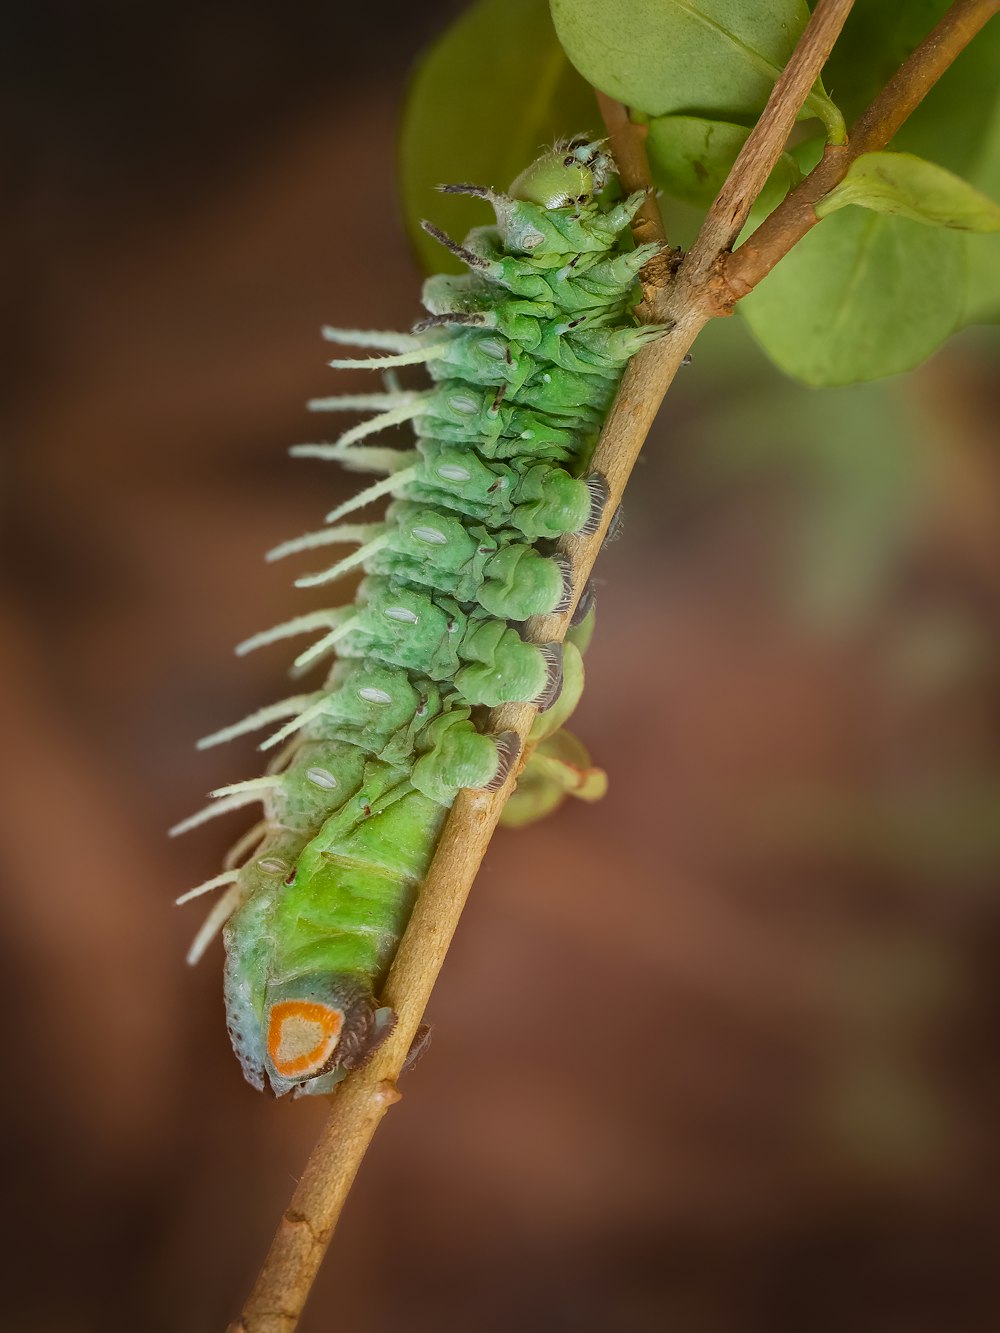 a close up of a green caterpillar on a branch